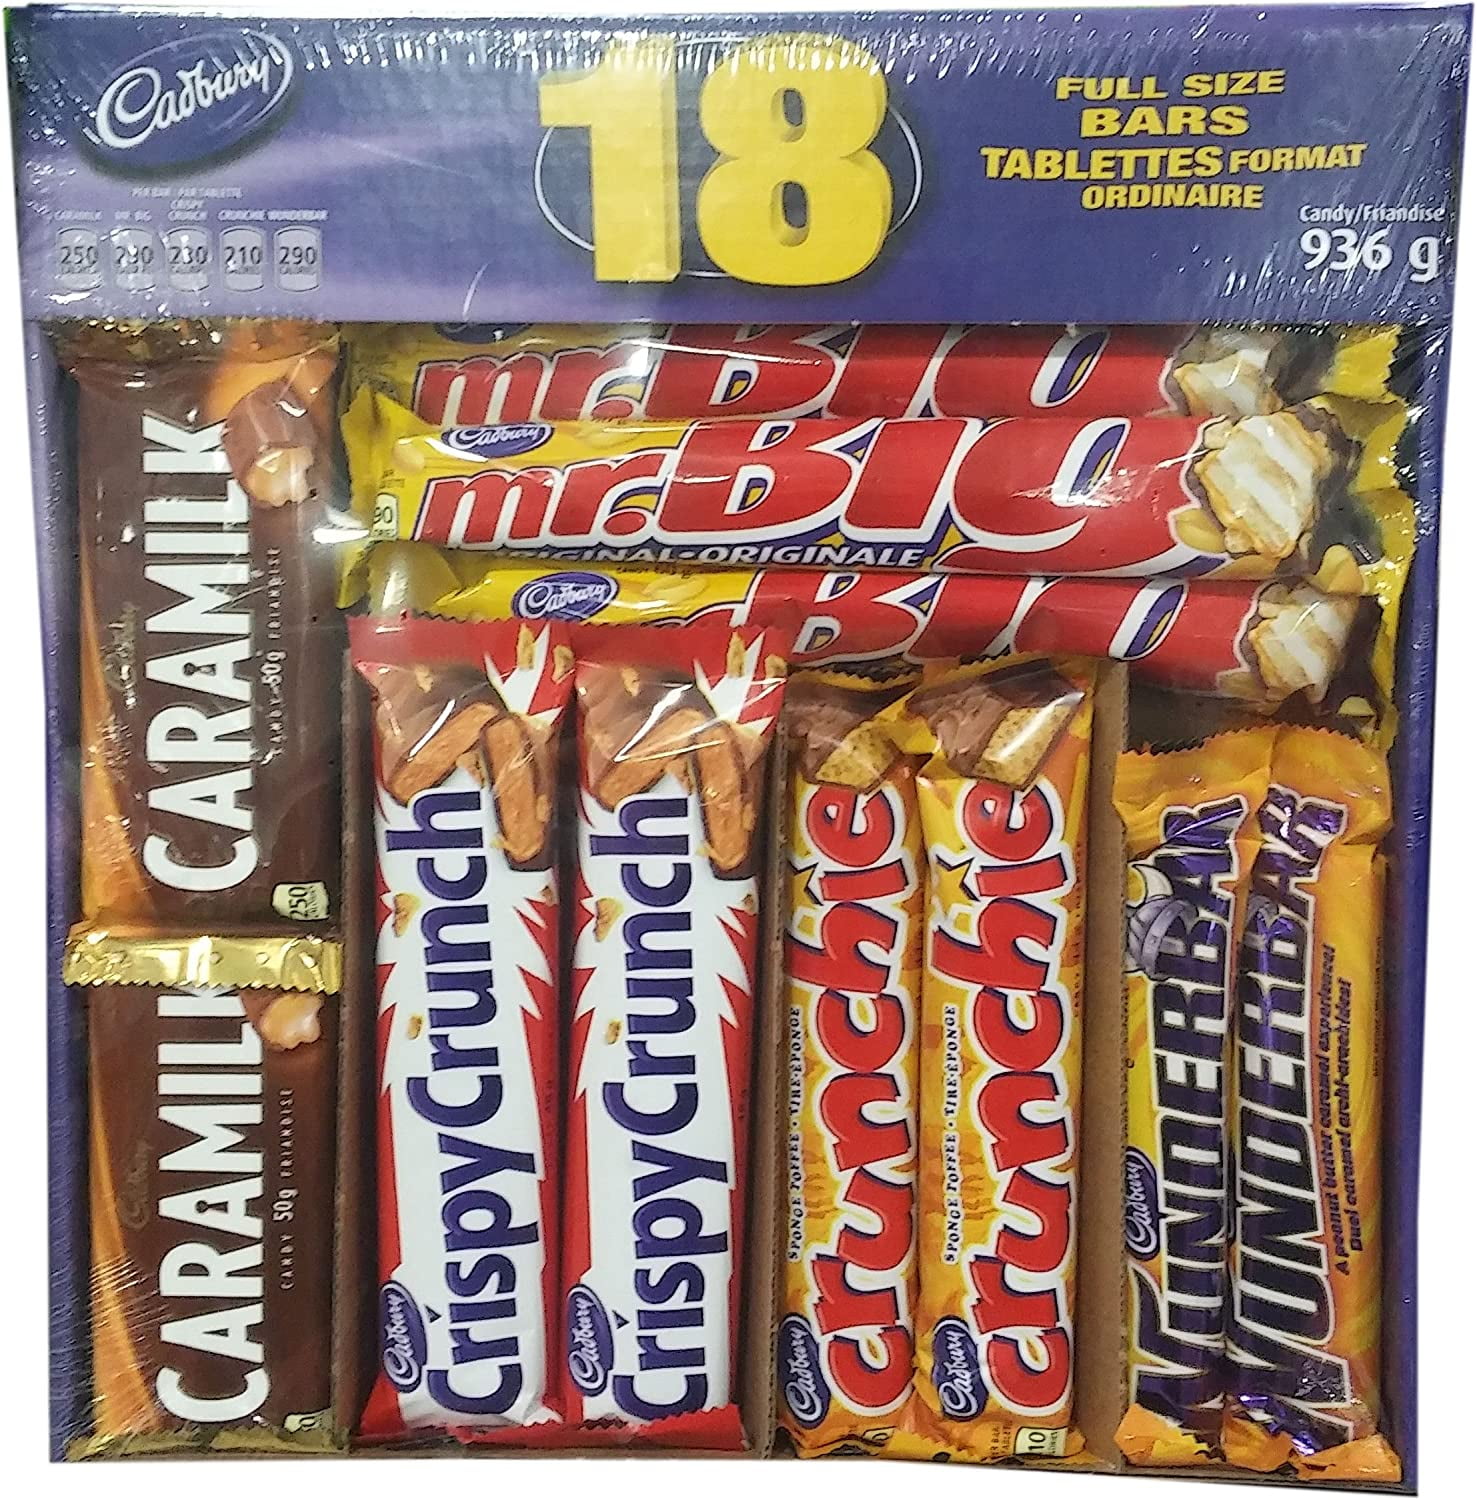 Cadbury Mr Big Original Chocolate 60g